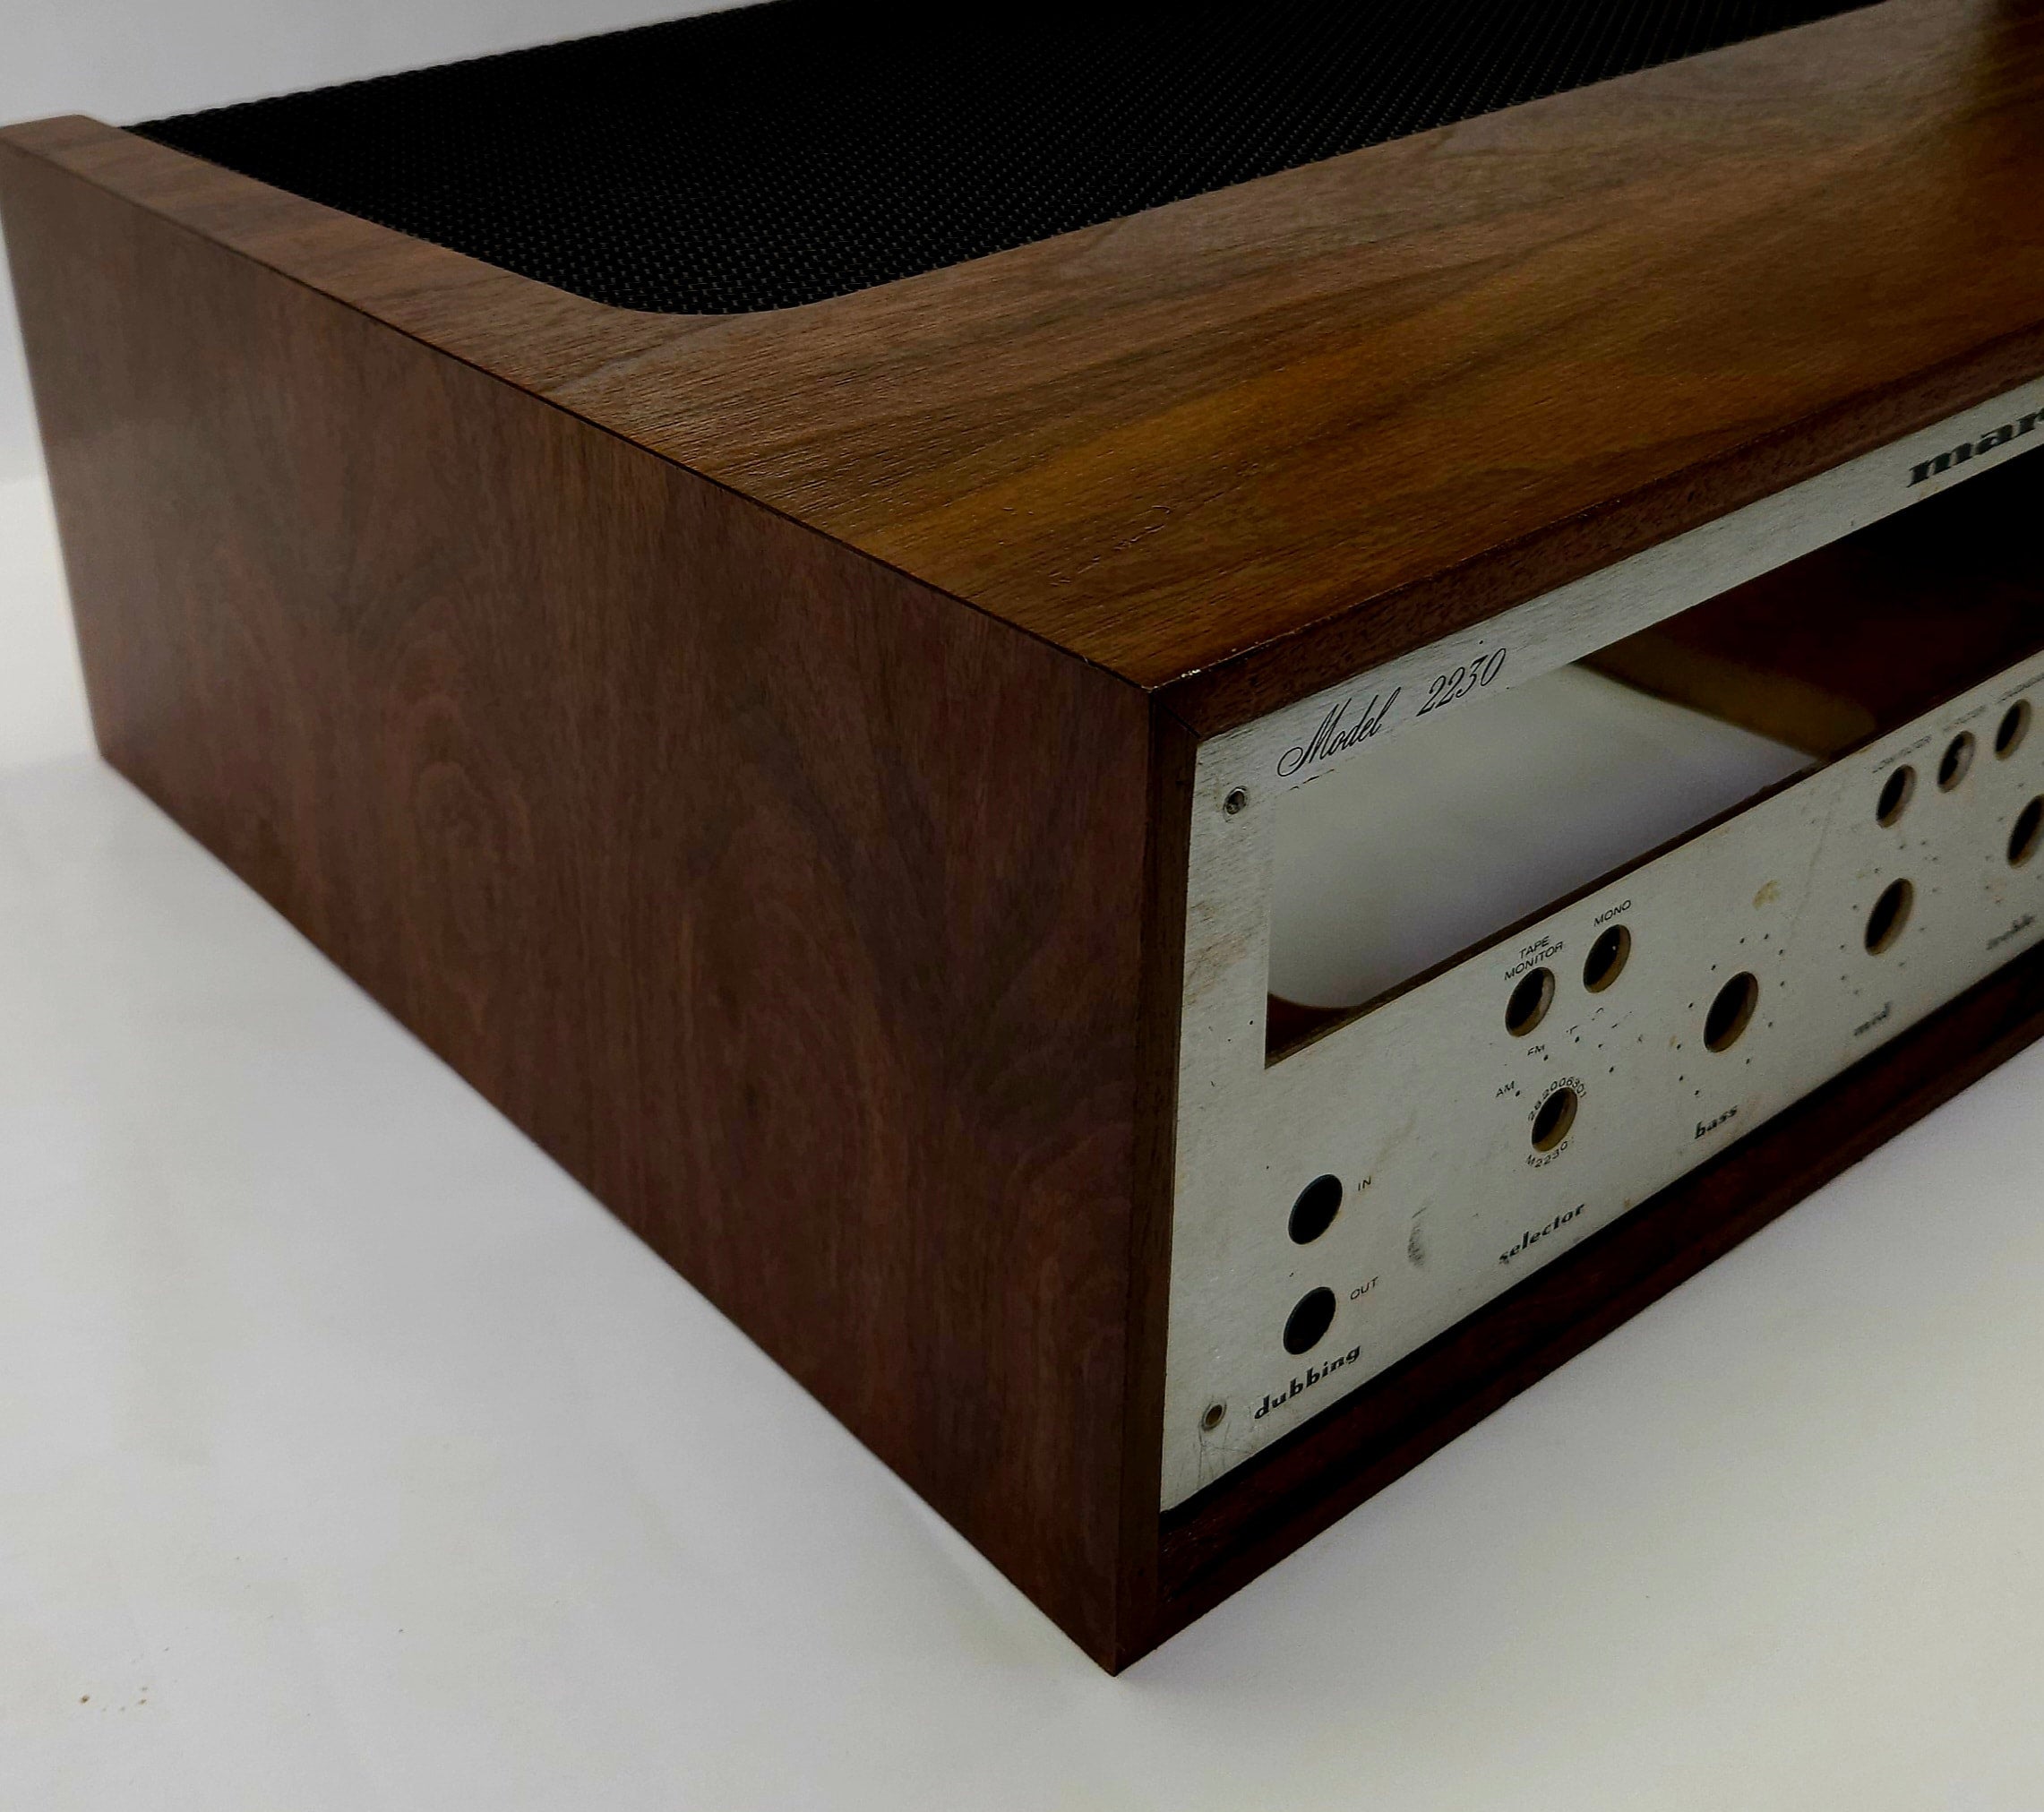 Marantz Wc 22 Wood Cabinet Case